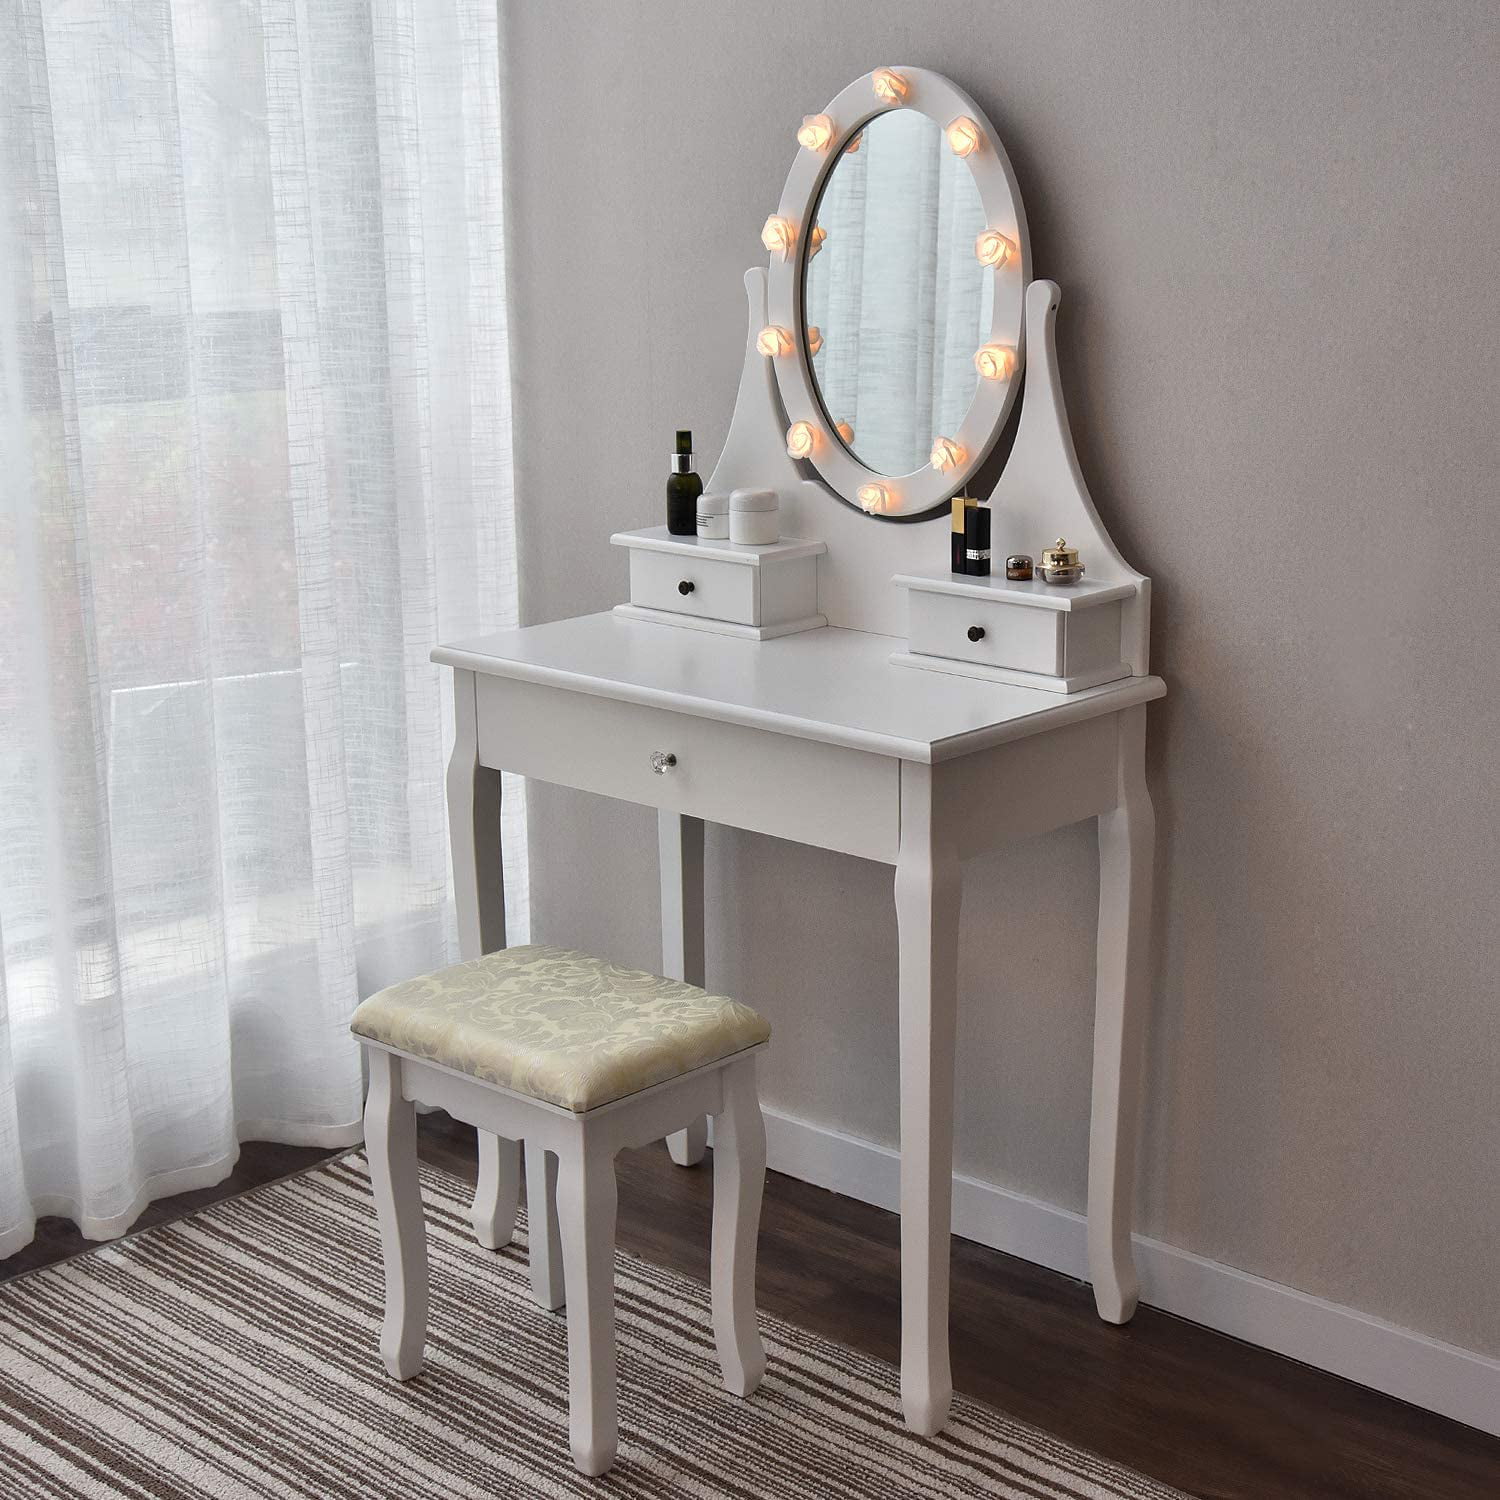 Elecwish Makeup Vanity Table Set Mirror, Makeup Vanity Tables With Mirror